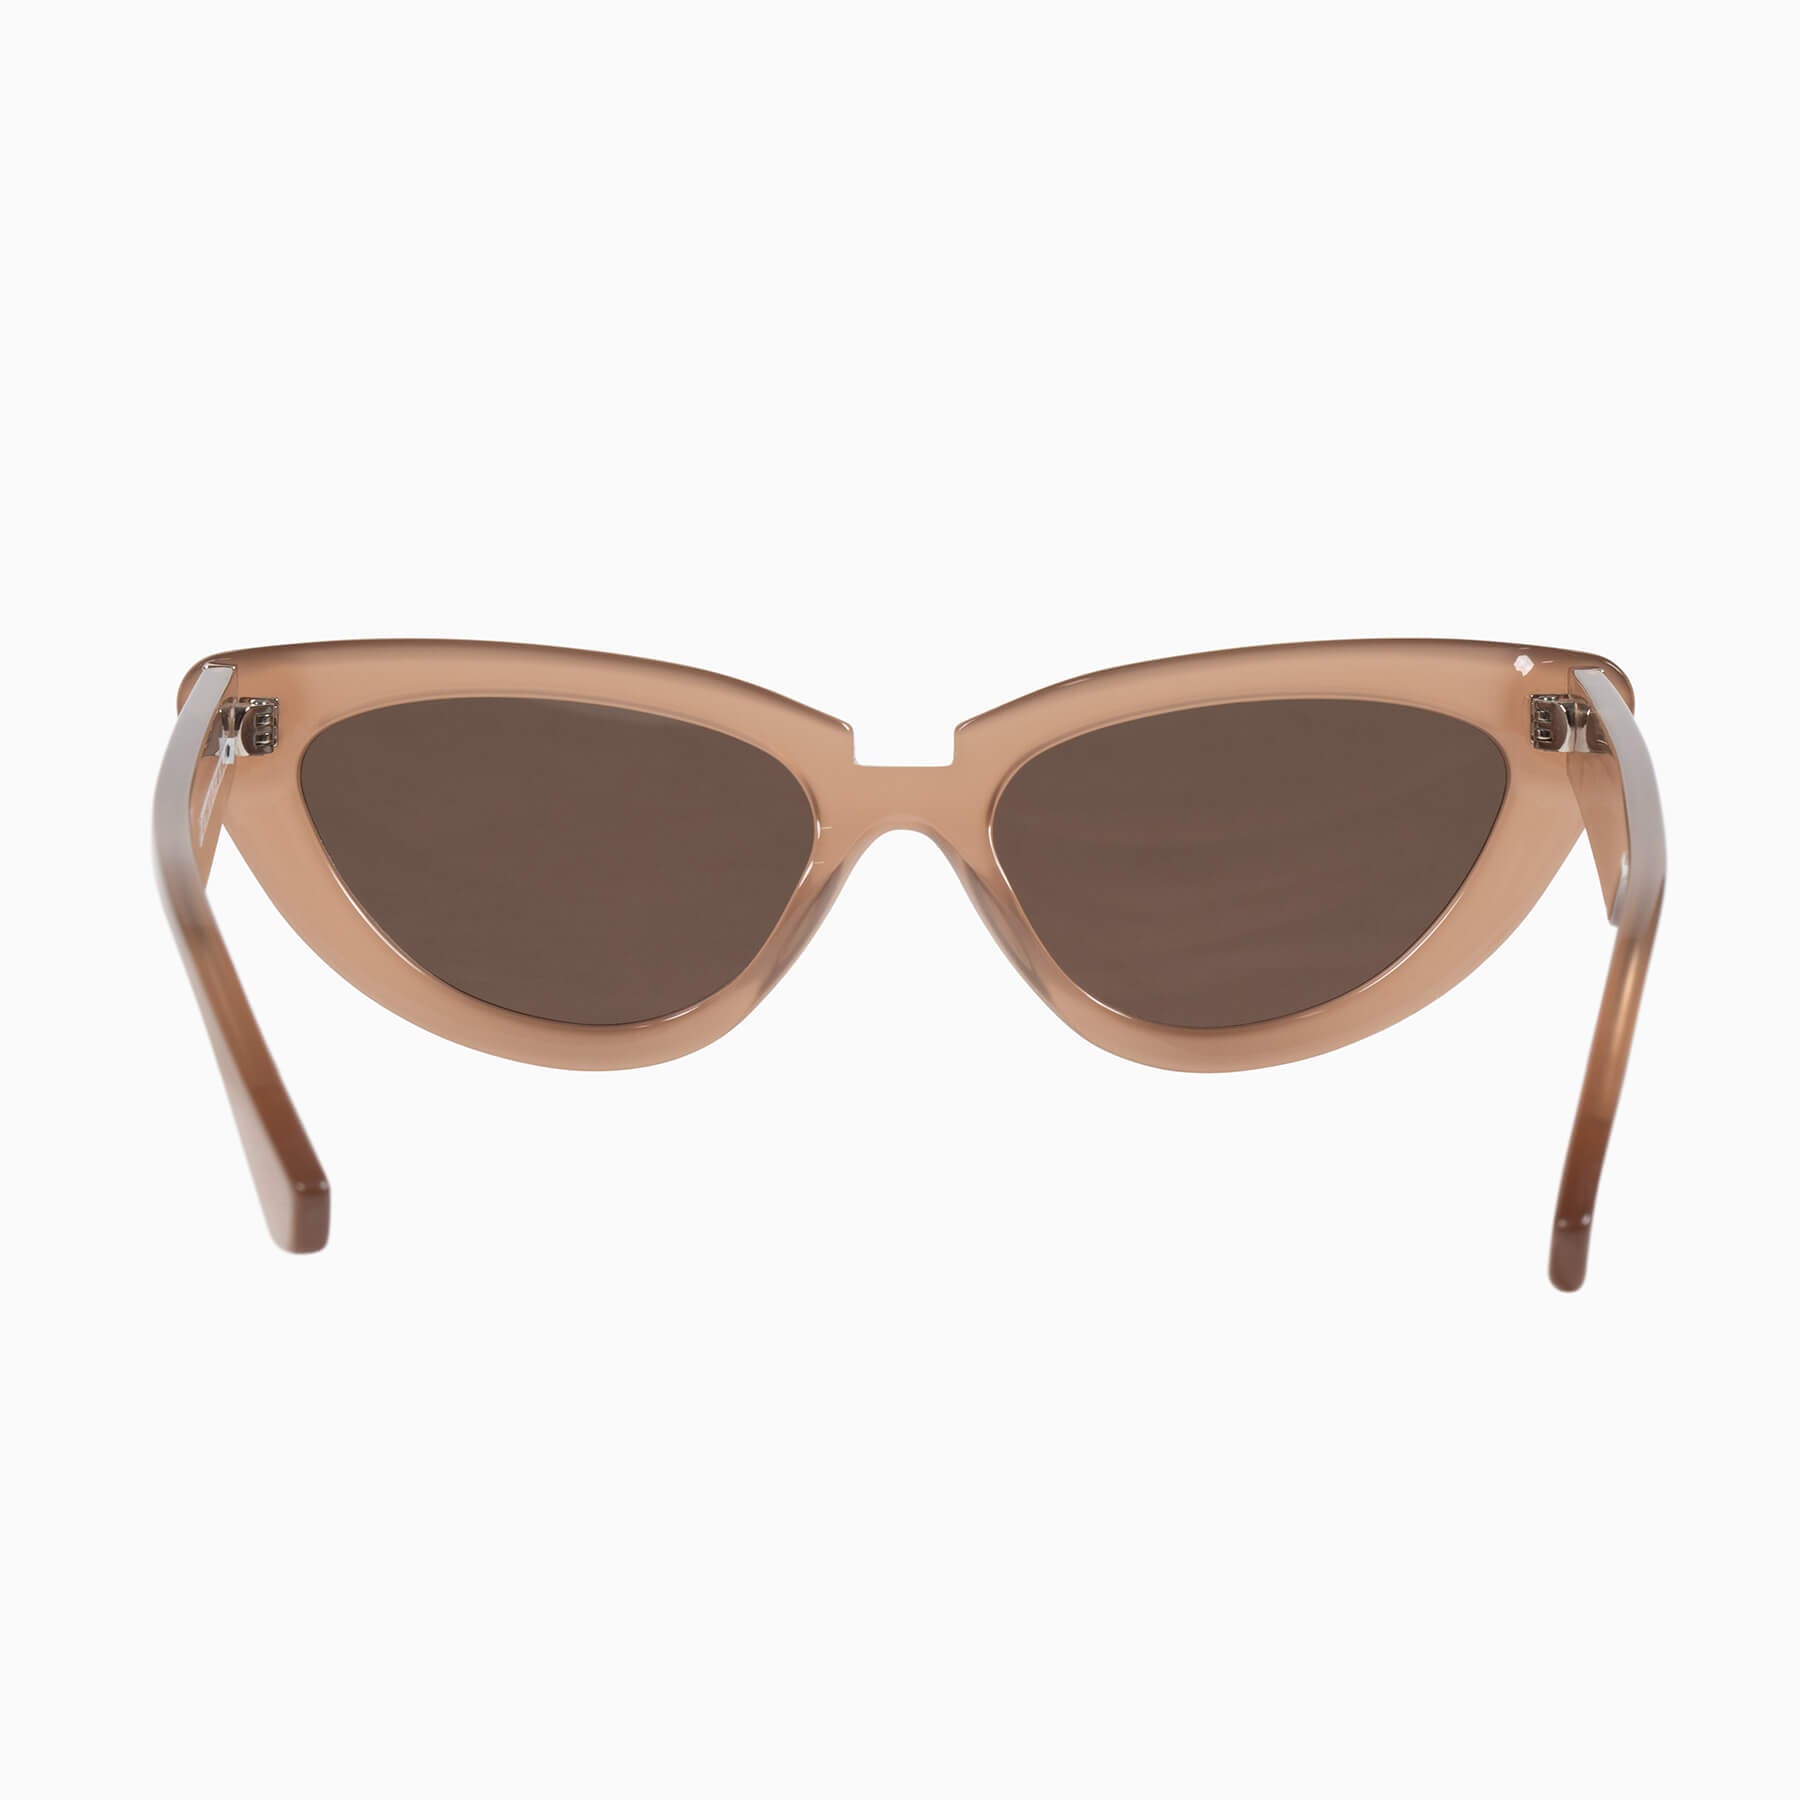 Dayze | Sunglasses - Chestnut w. Gold Metal Trim / Brown Lens